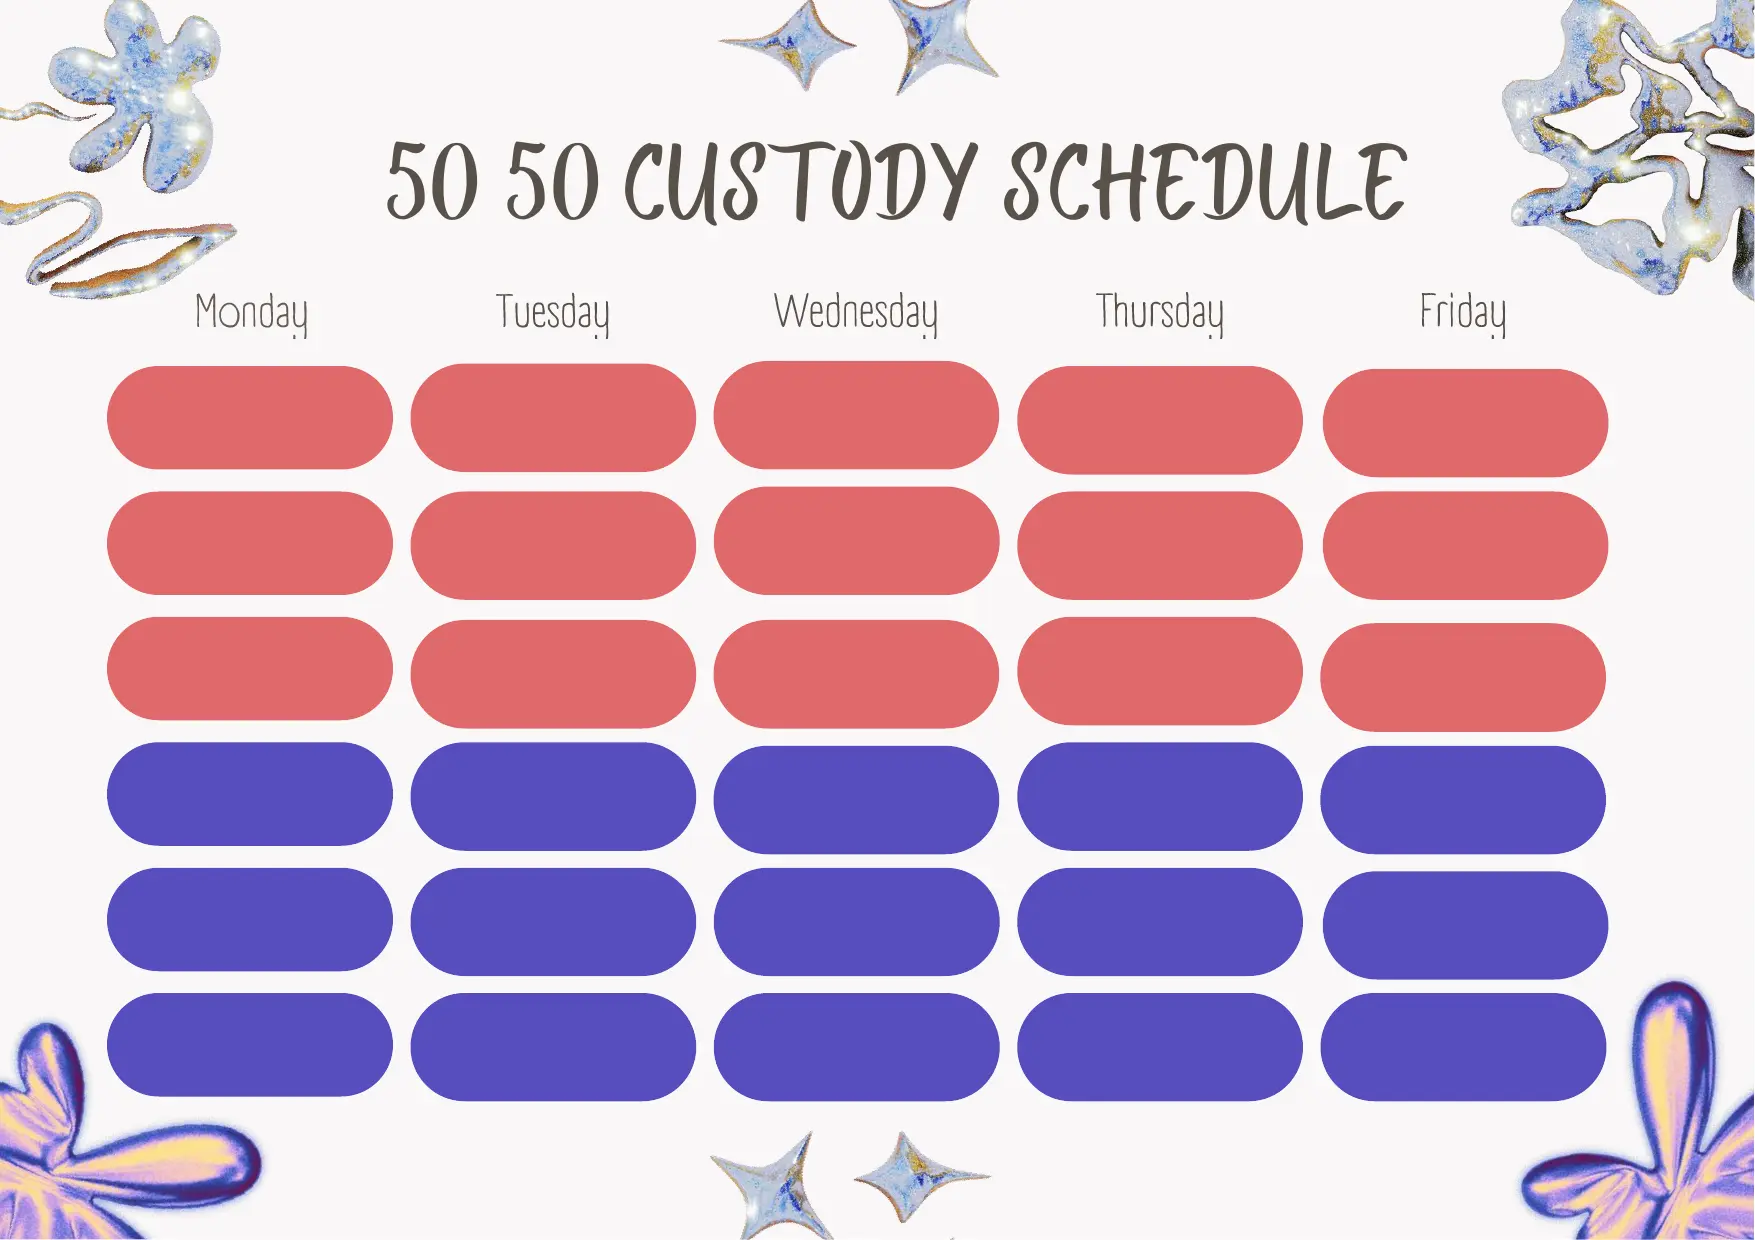 50 50 Custody Schedule